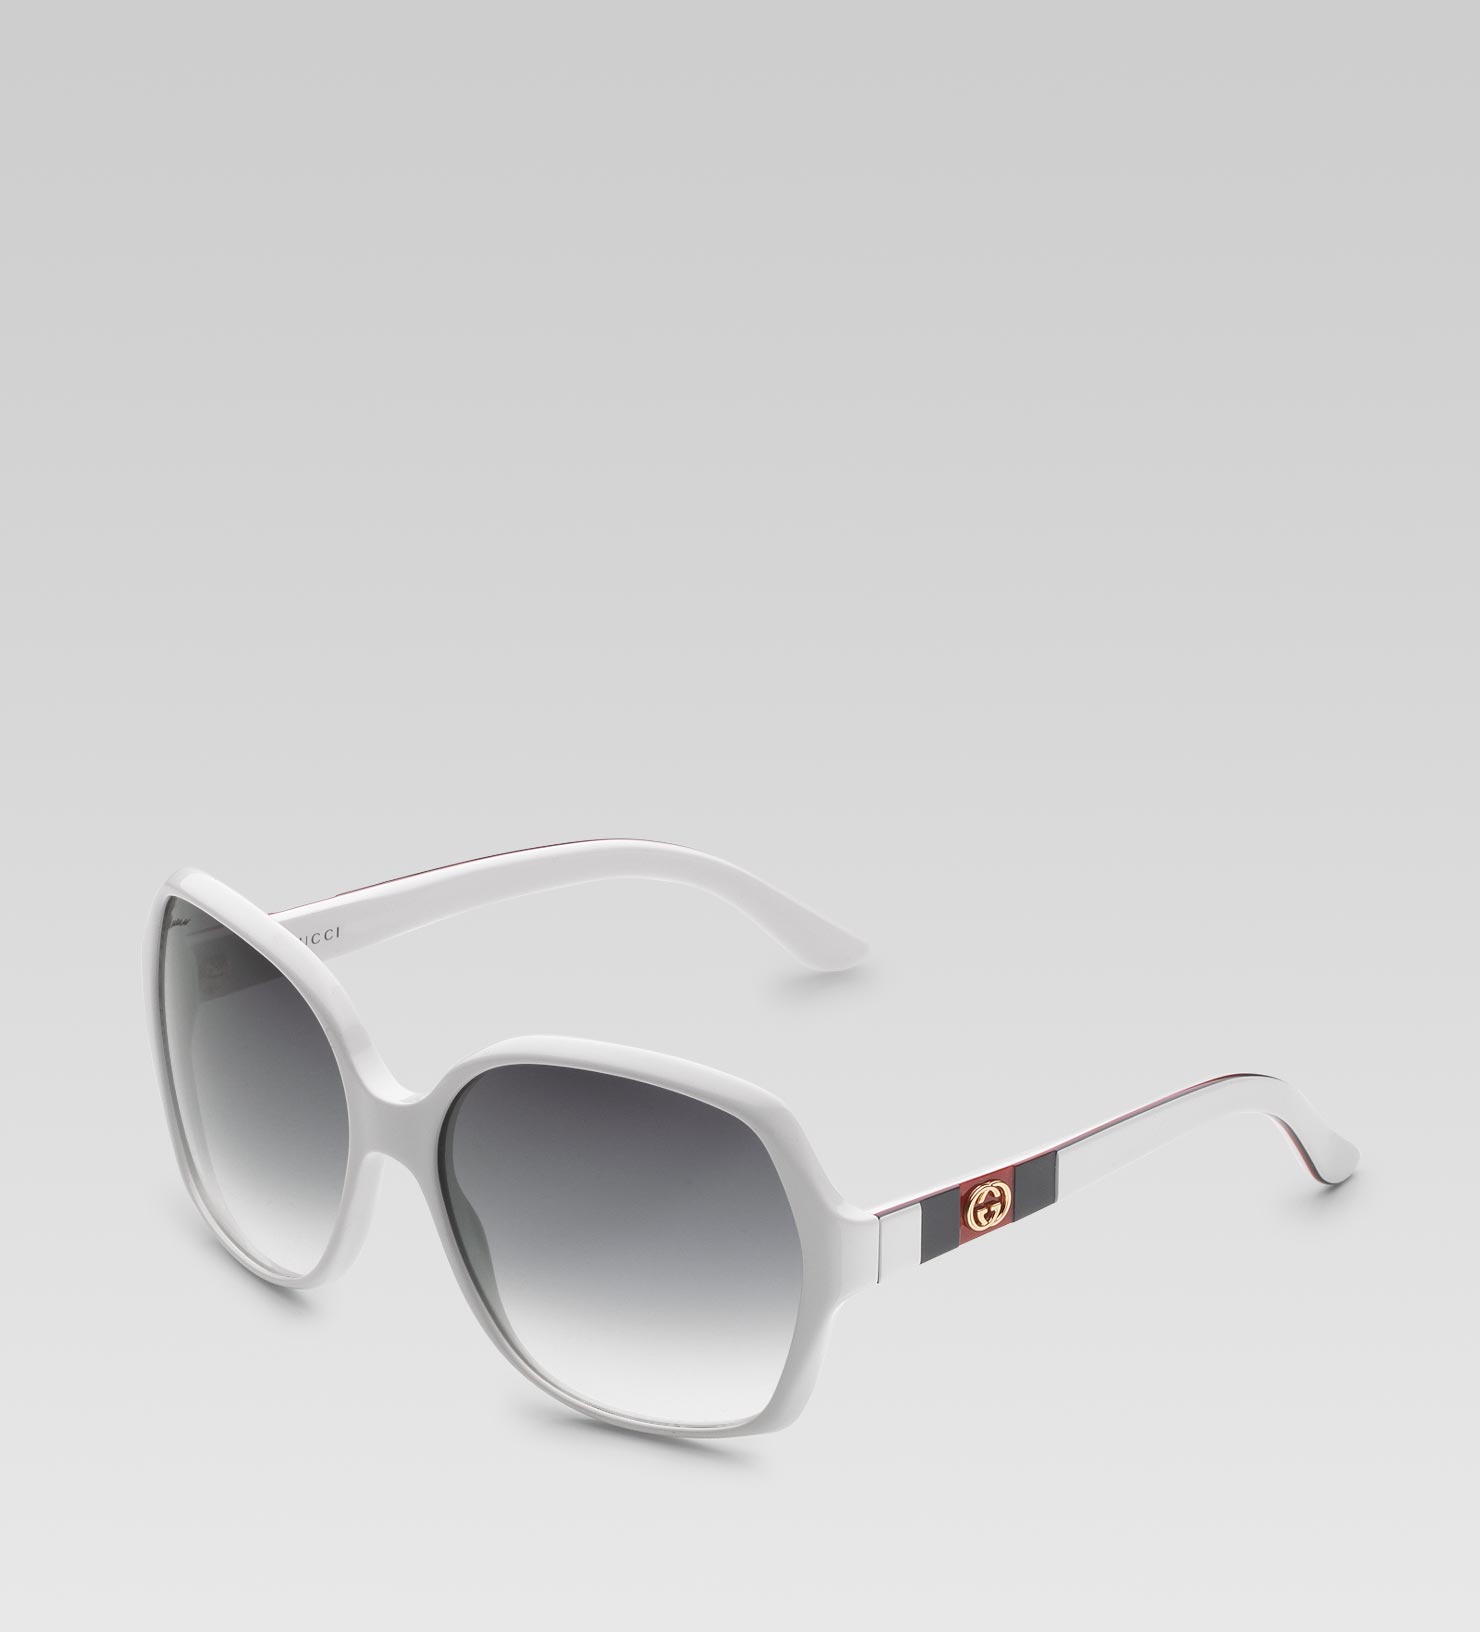 gucci sunglasses white frame